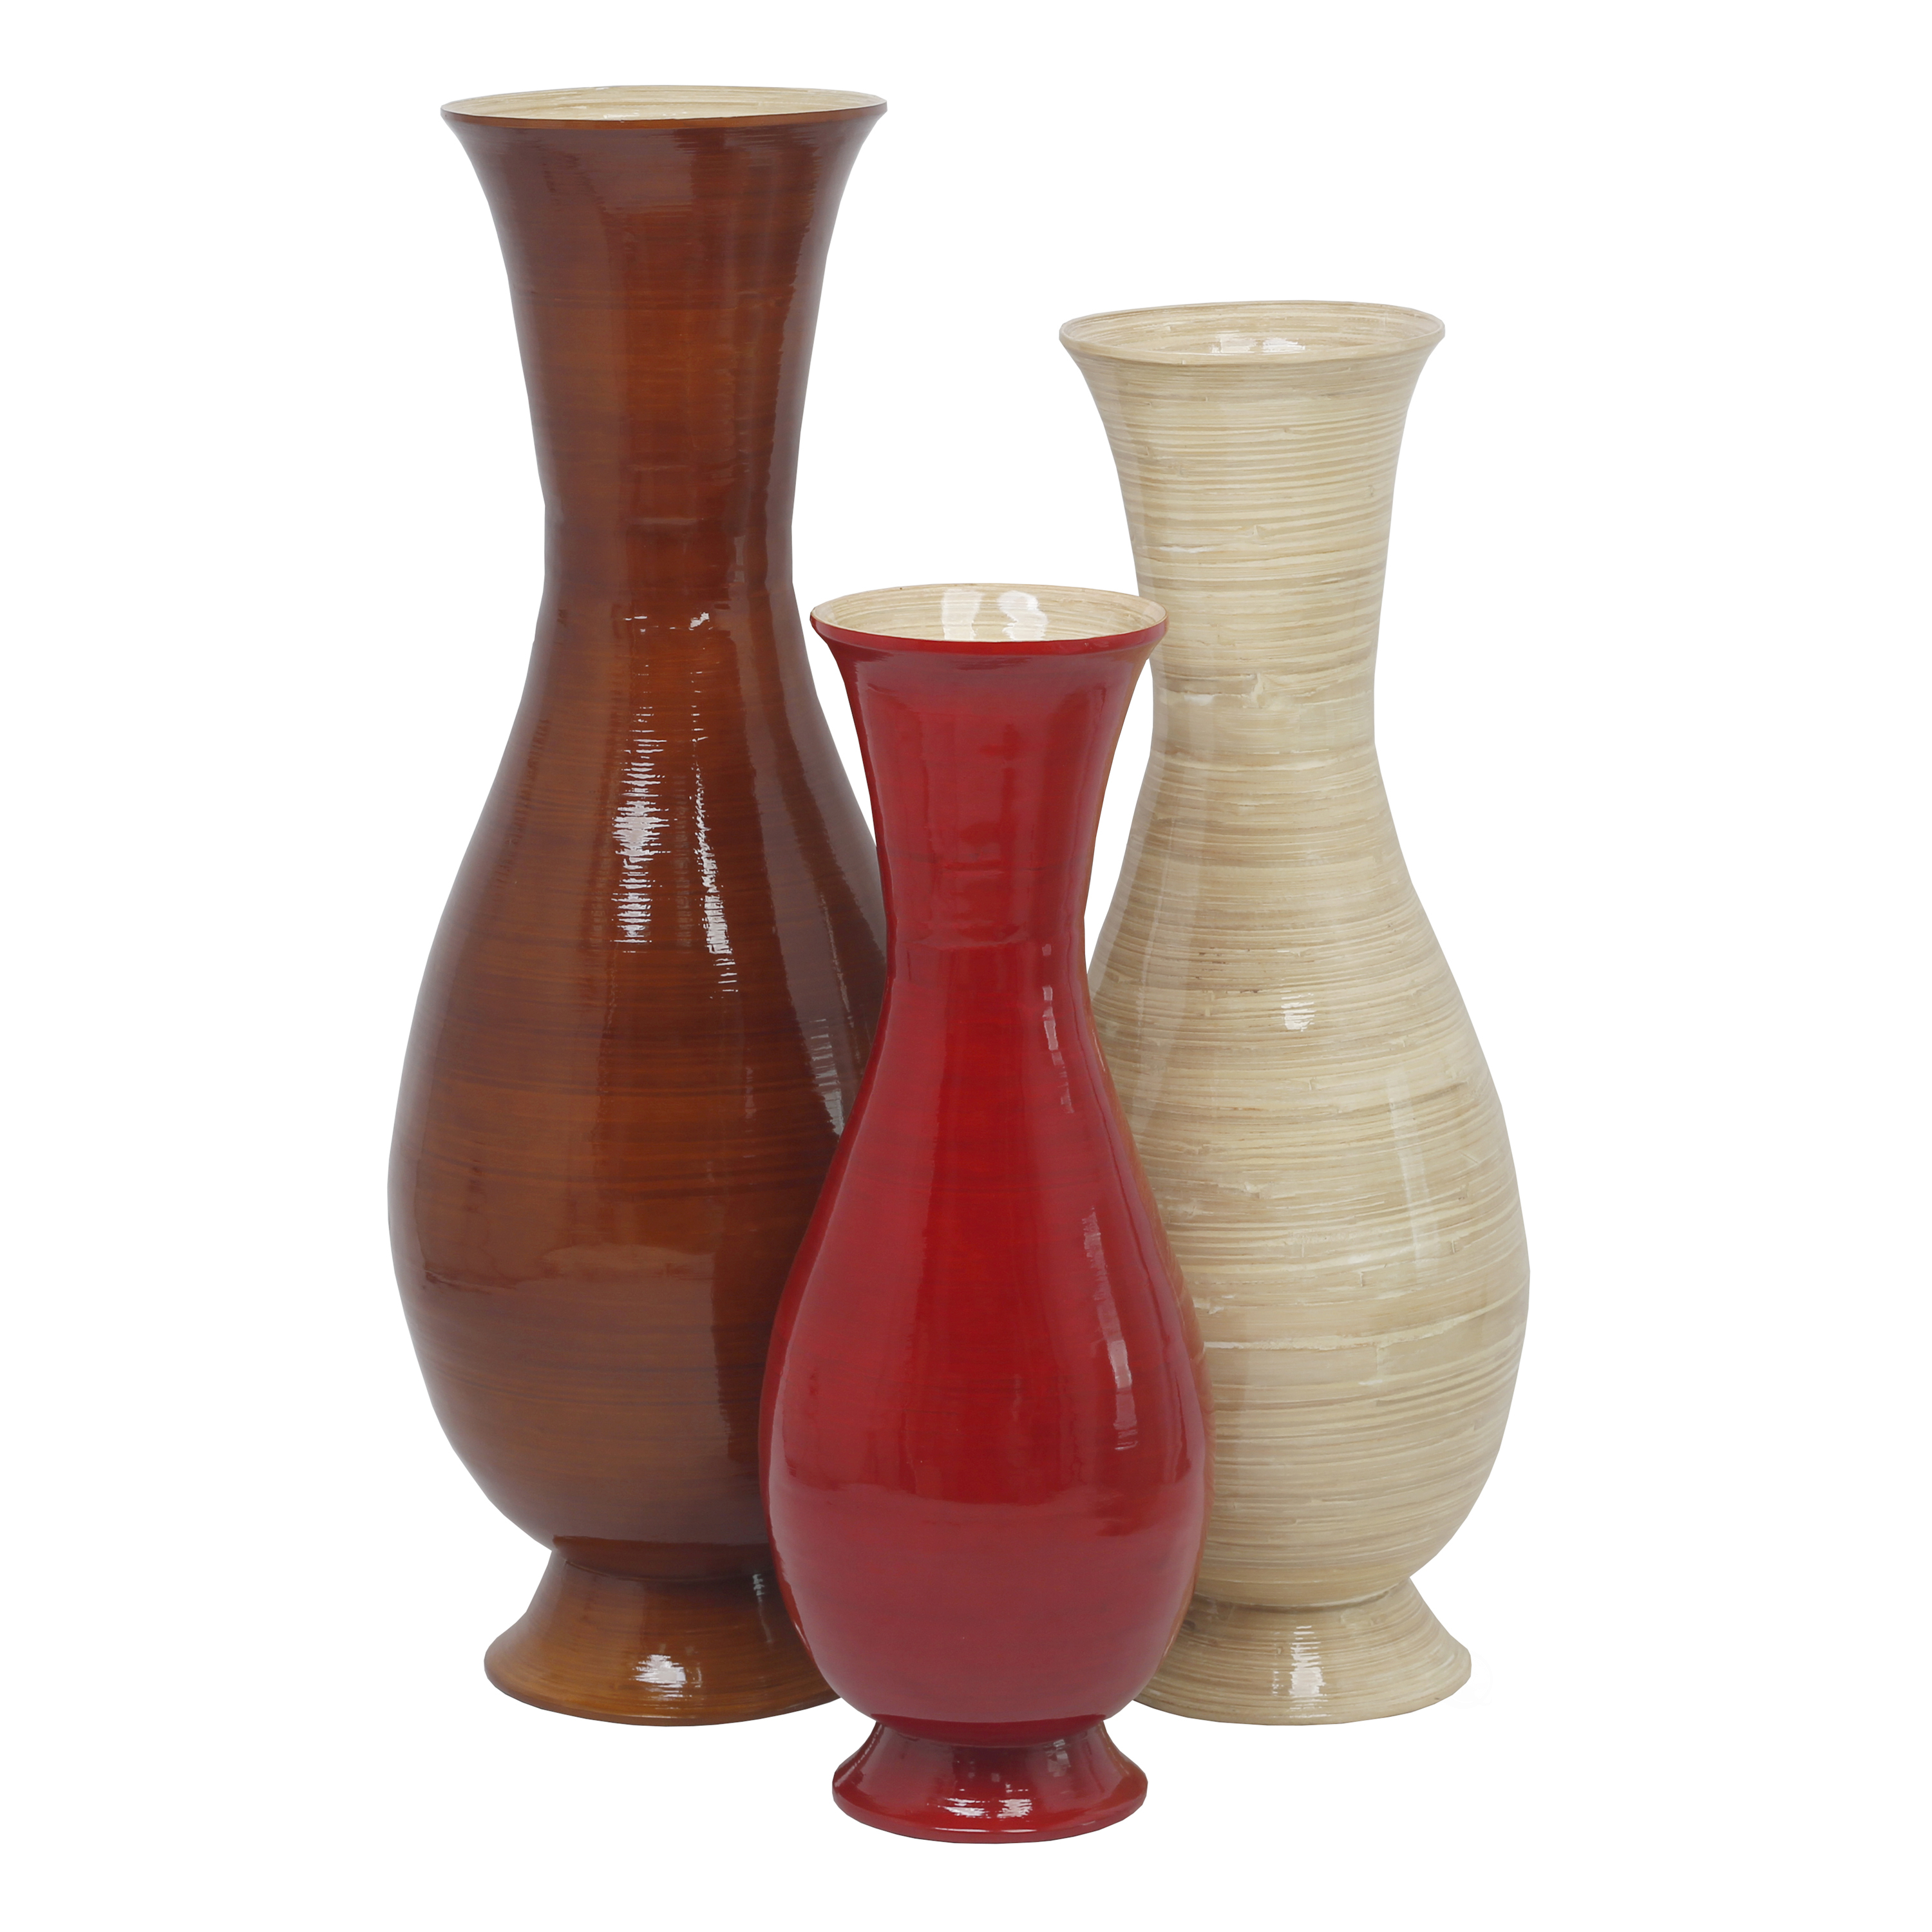 Tall Modern Decorative Floor Vase: Handmade, Natural Bamboo Finish, Contemporary Home DÃ©cor, Handcrafted Bamboo, Elegant Interior Design - L